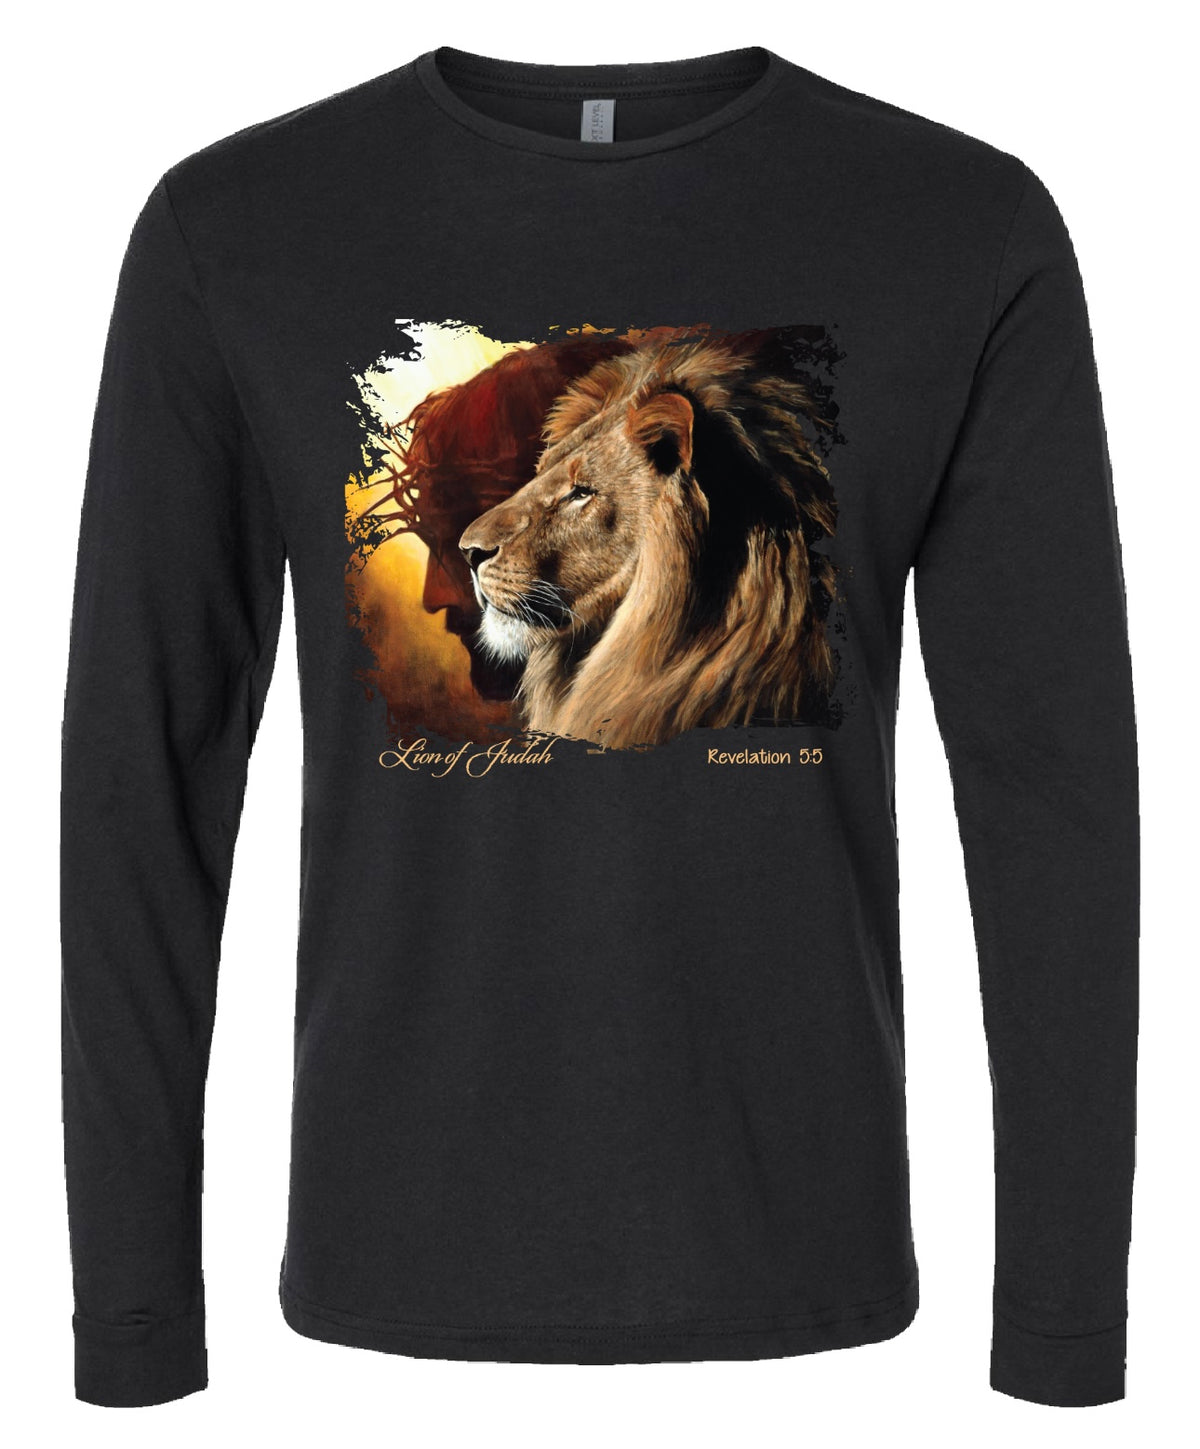 The Lion of Judah - Unisex Long Sleeve T-Shirt